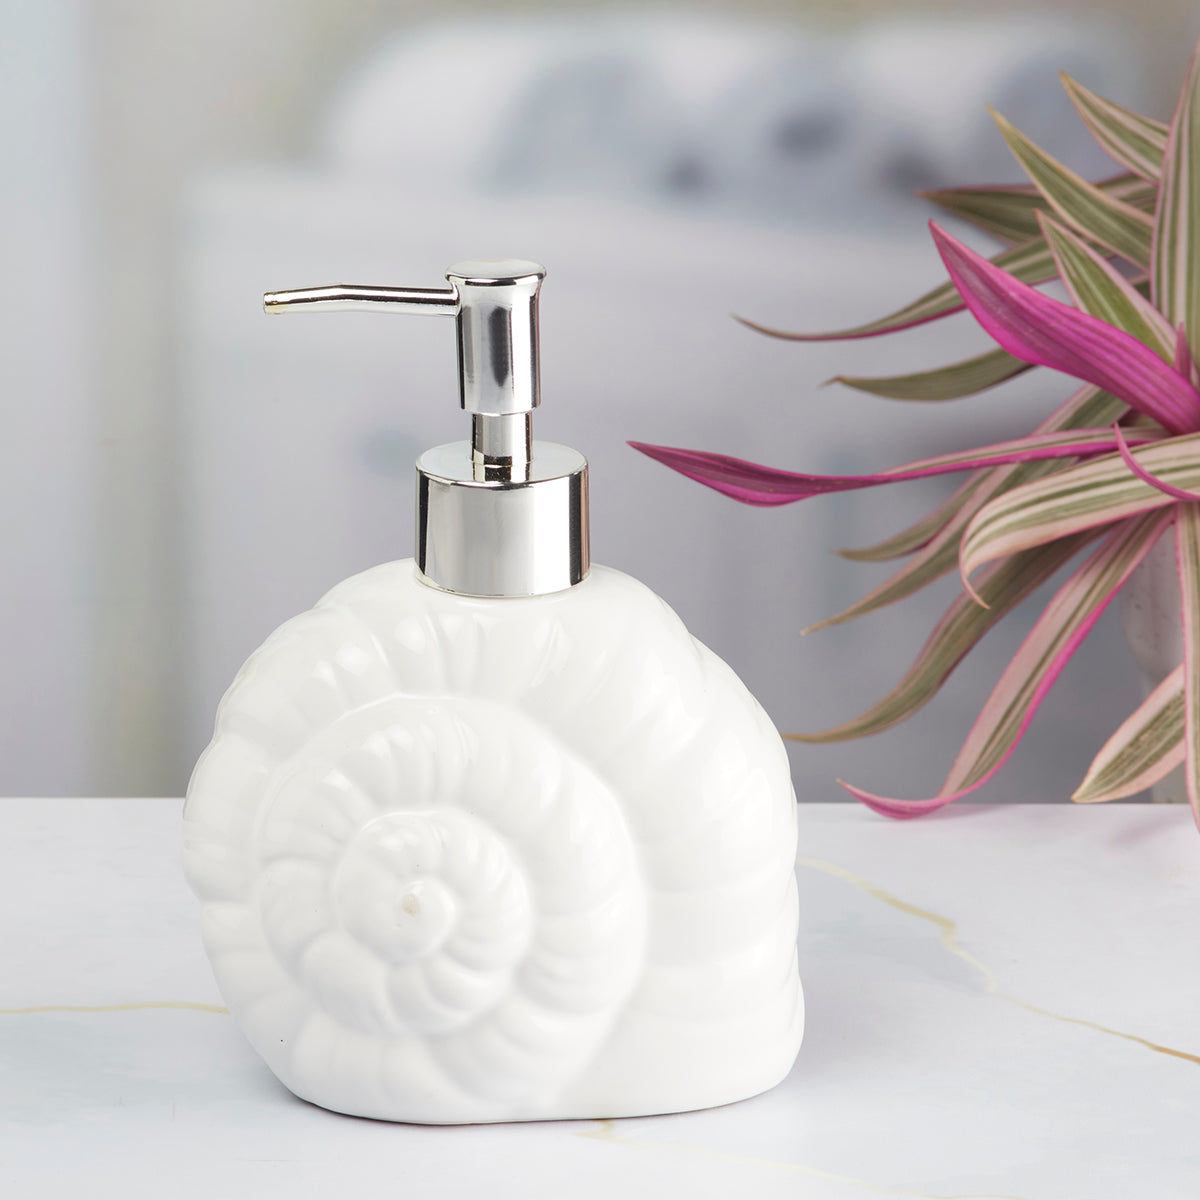 Ceramic Soap Dispenser handwash Pump for Bathroom, Set of 1, White (8463)